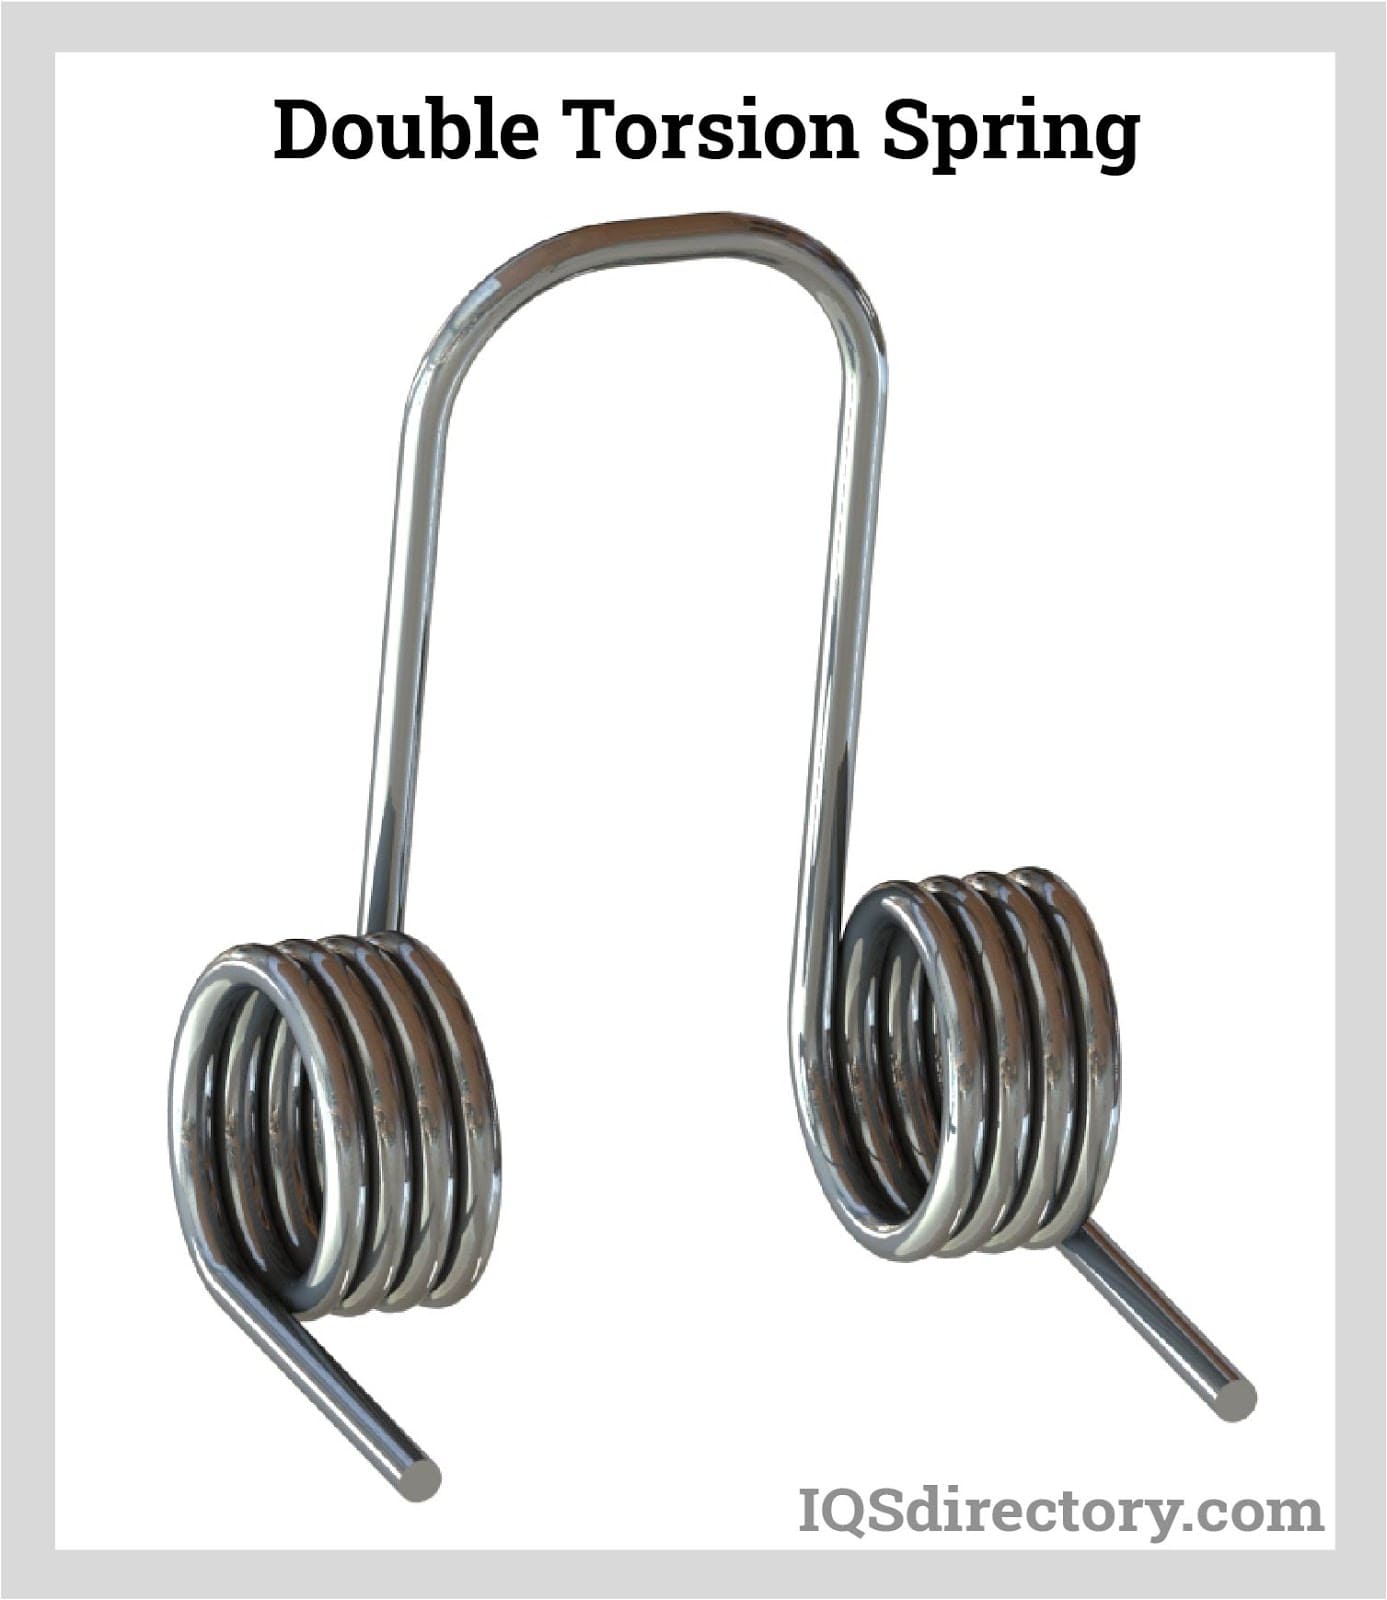 Double Torsion Spring